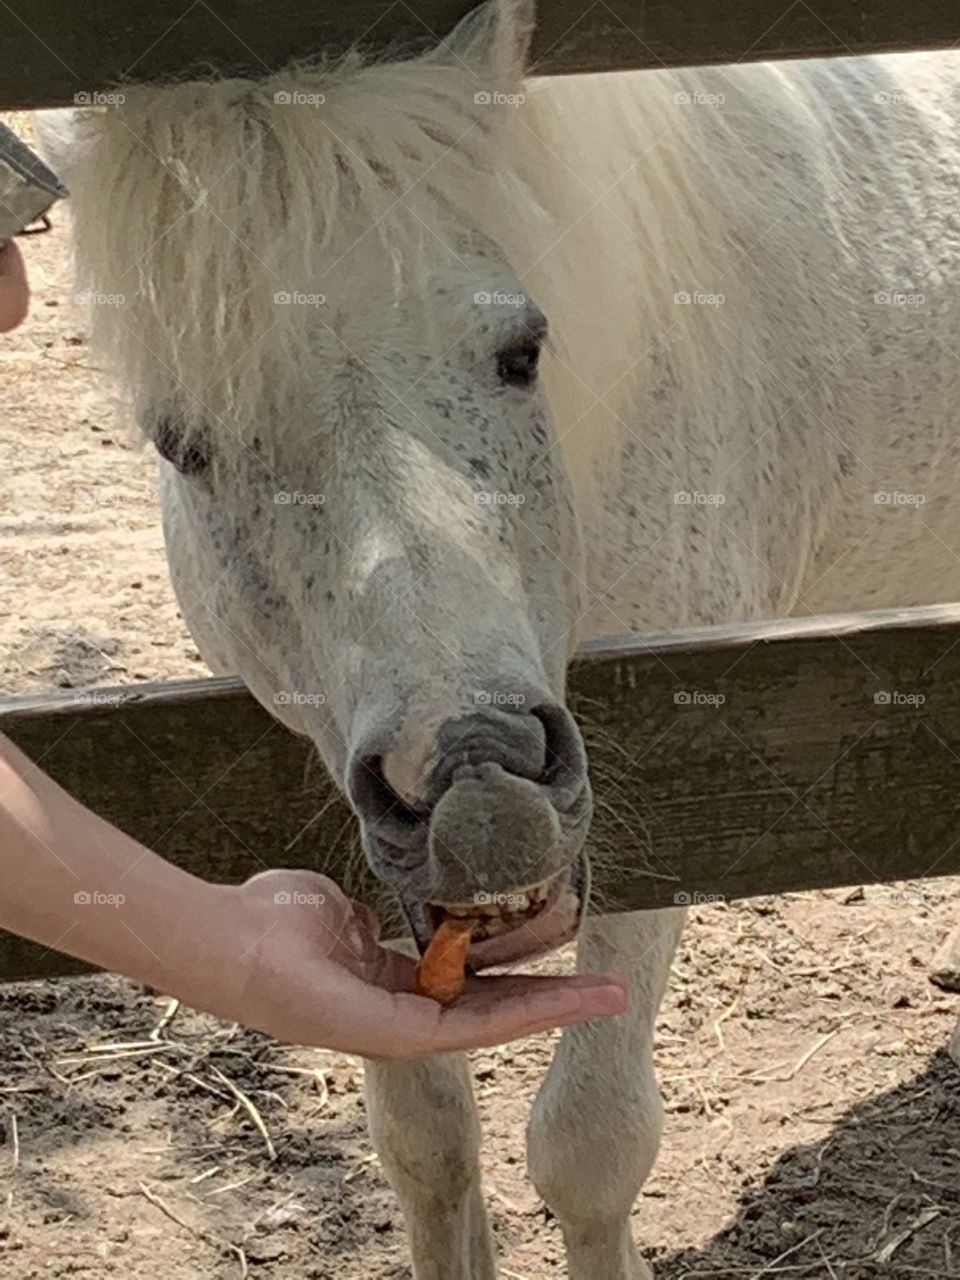 Feeding the miniature horse